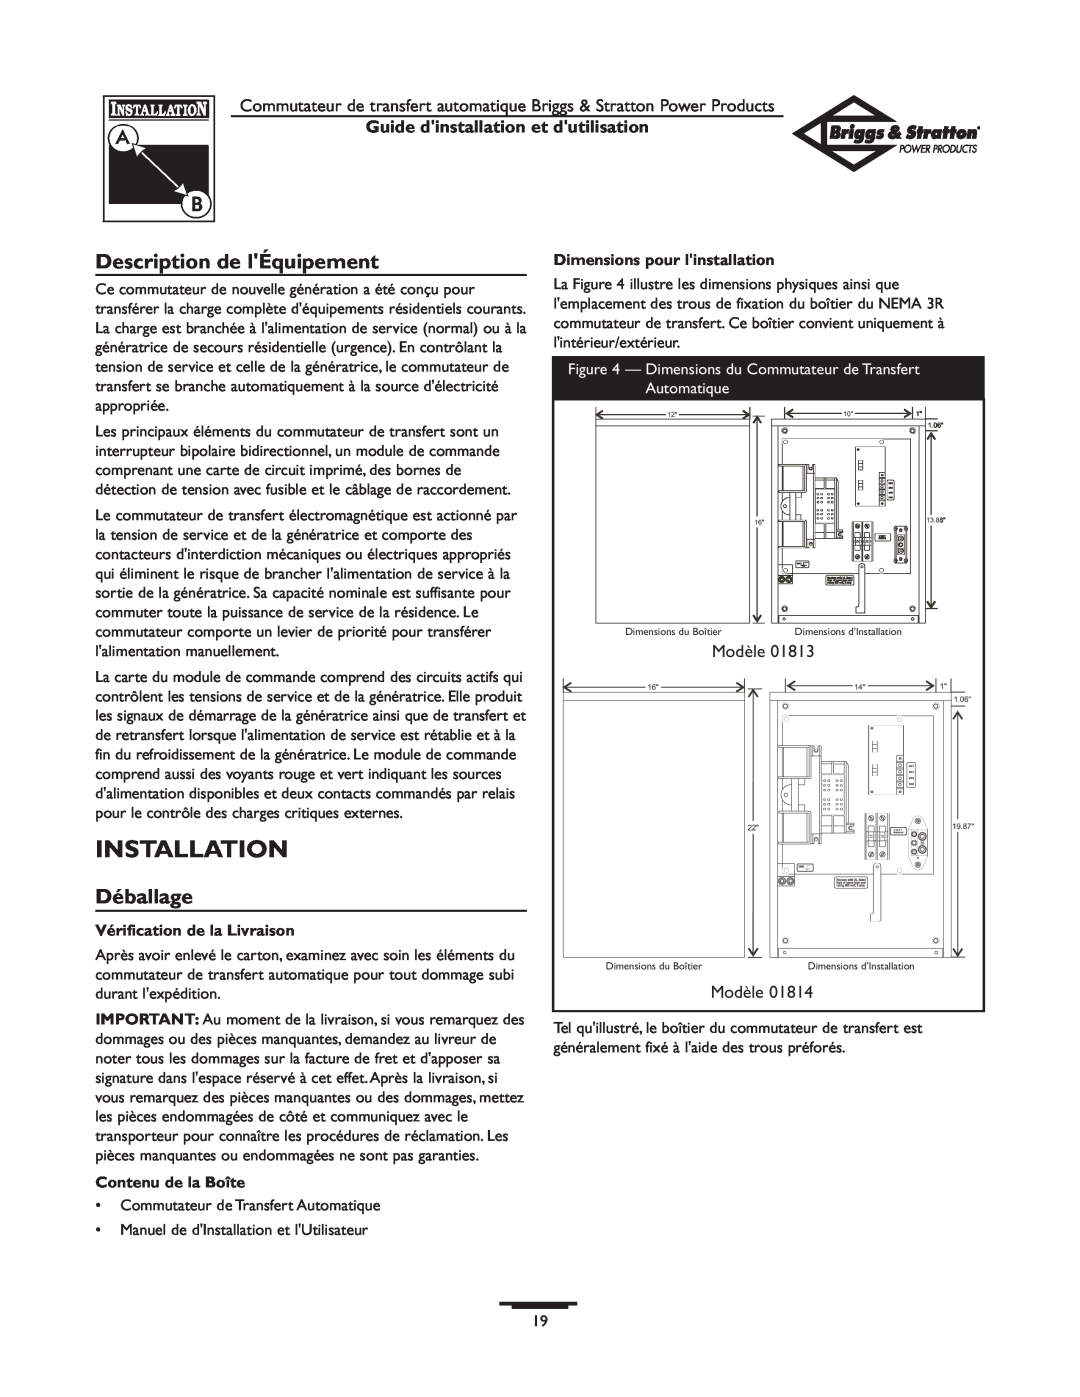 Briggs & Stratton 01813-0 Installation, Description de lÉquipement, Déballage, Guide dinstallation et dutilisation 